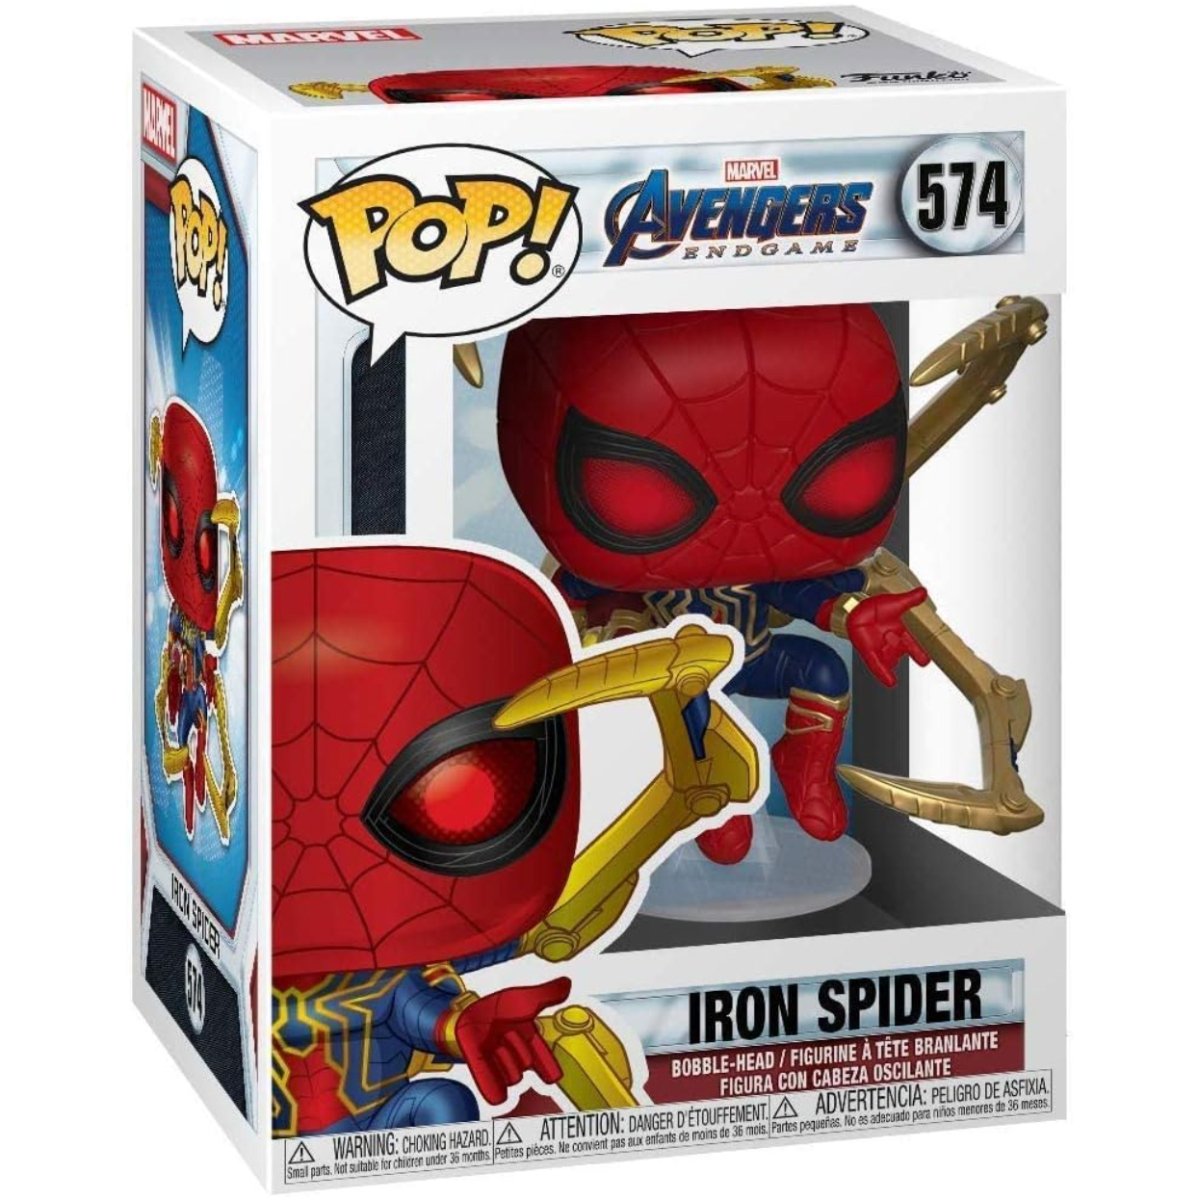 Avengers Endgame - Iron Spider [Spider-Man] #574 - Funko Pop! Vinyl Marvel - Persona Toys